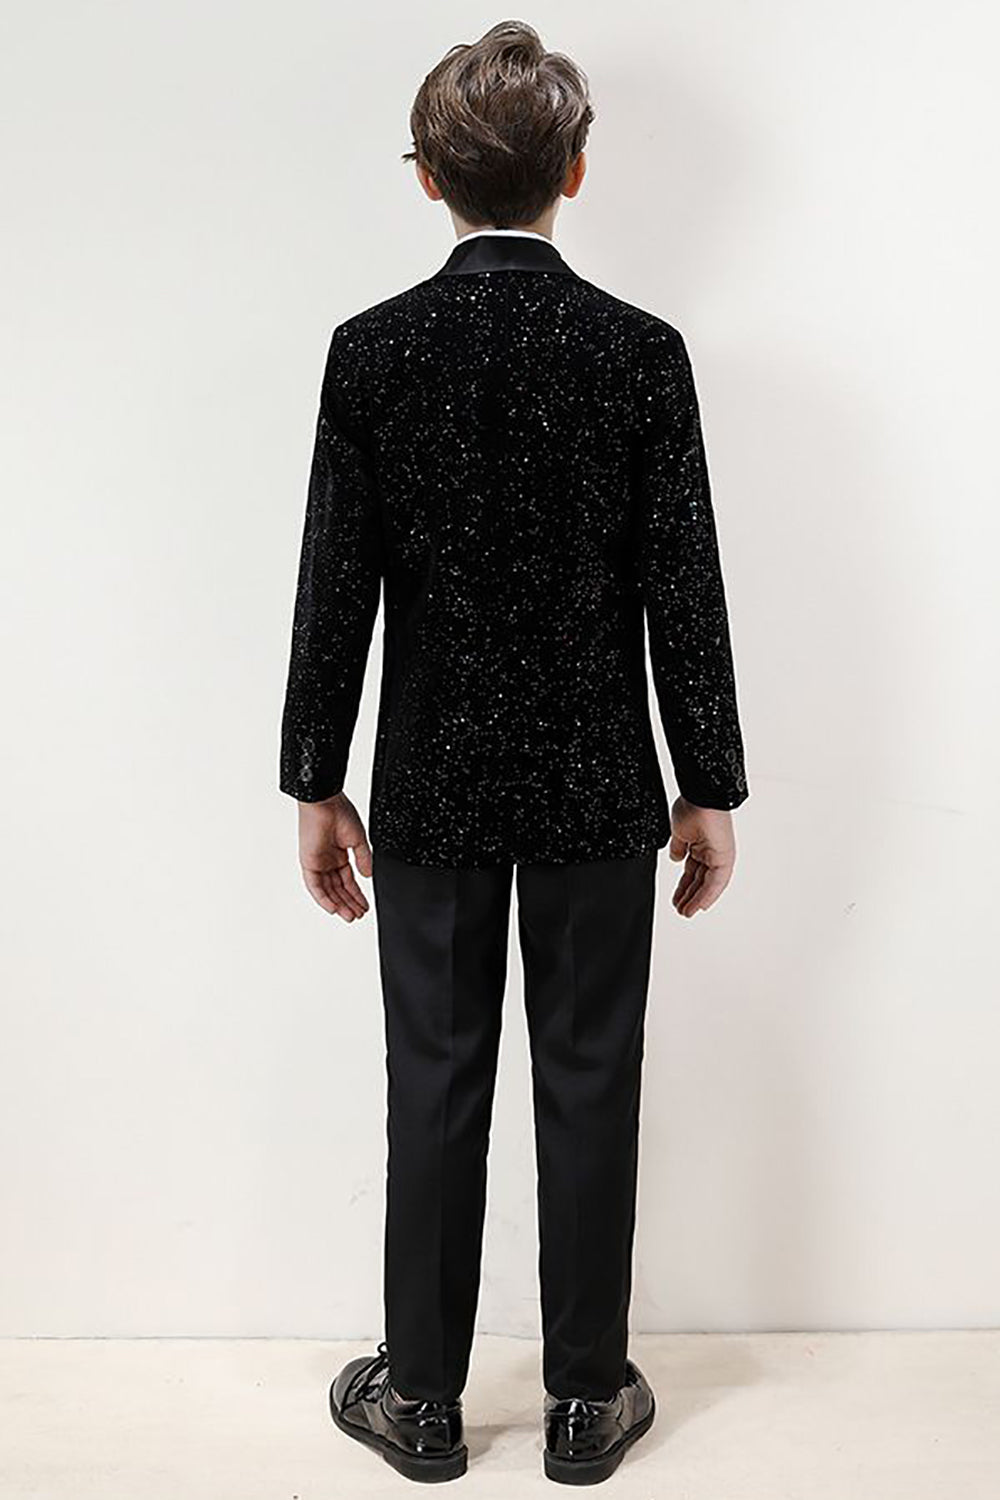 ZAPAKA Sparkly Black Boys' 3-Piece Formal Suit Set Slim Fit